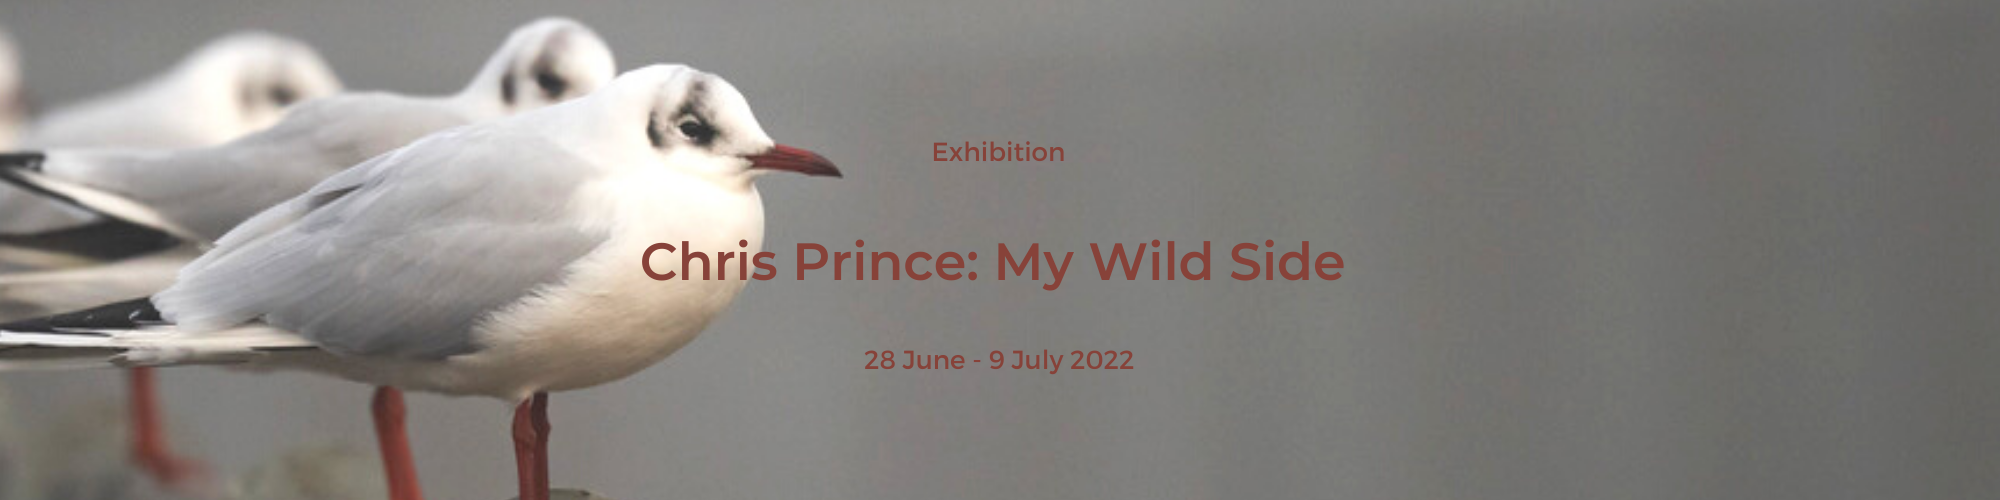 Chris Prince: My Wild Side